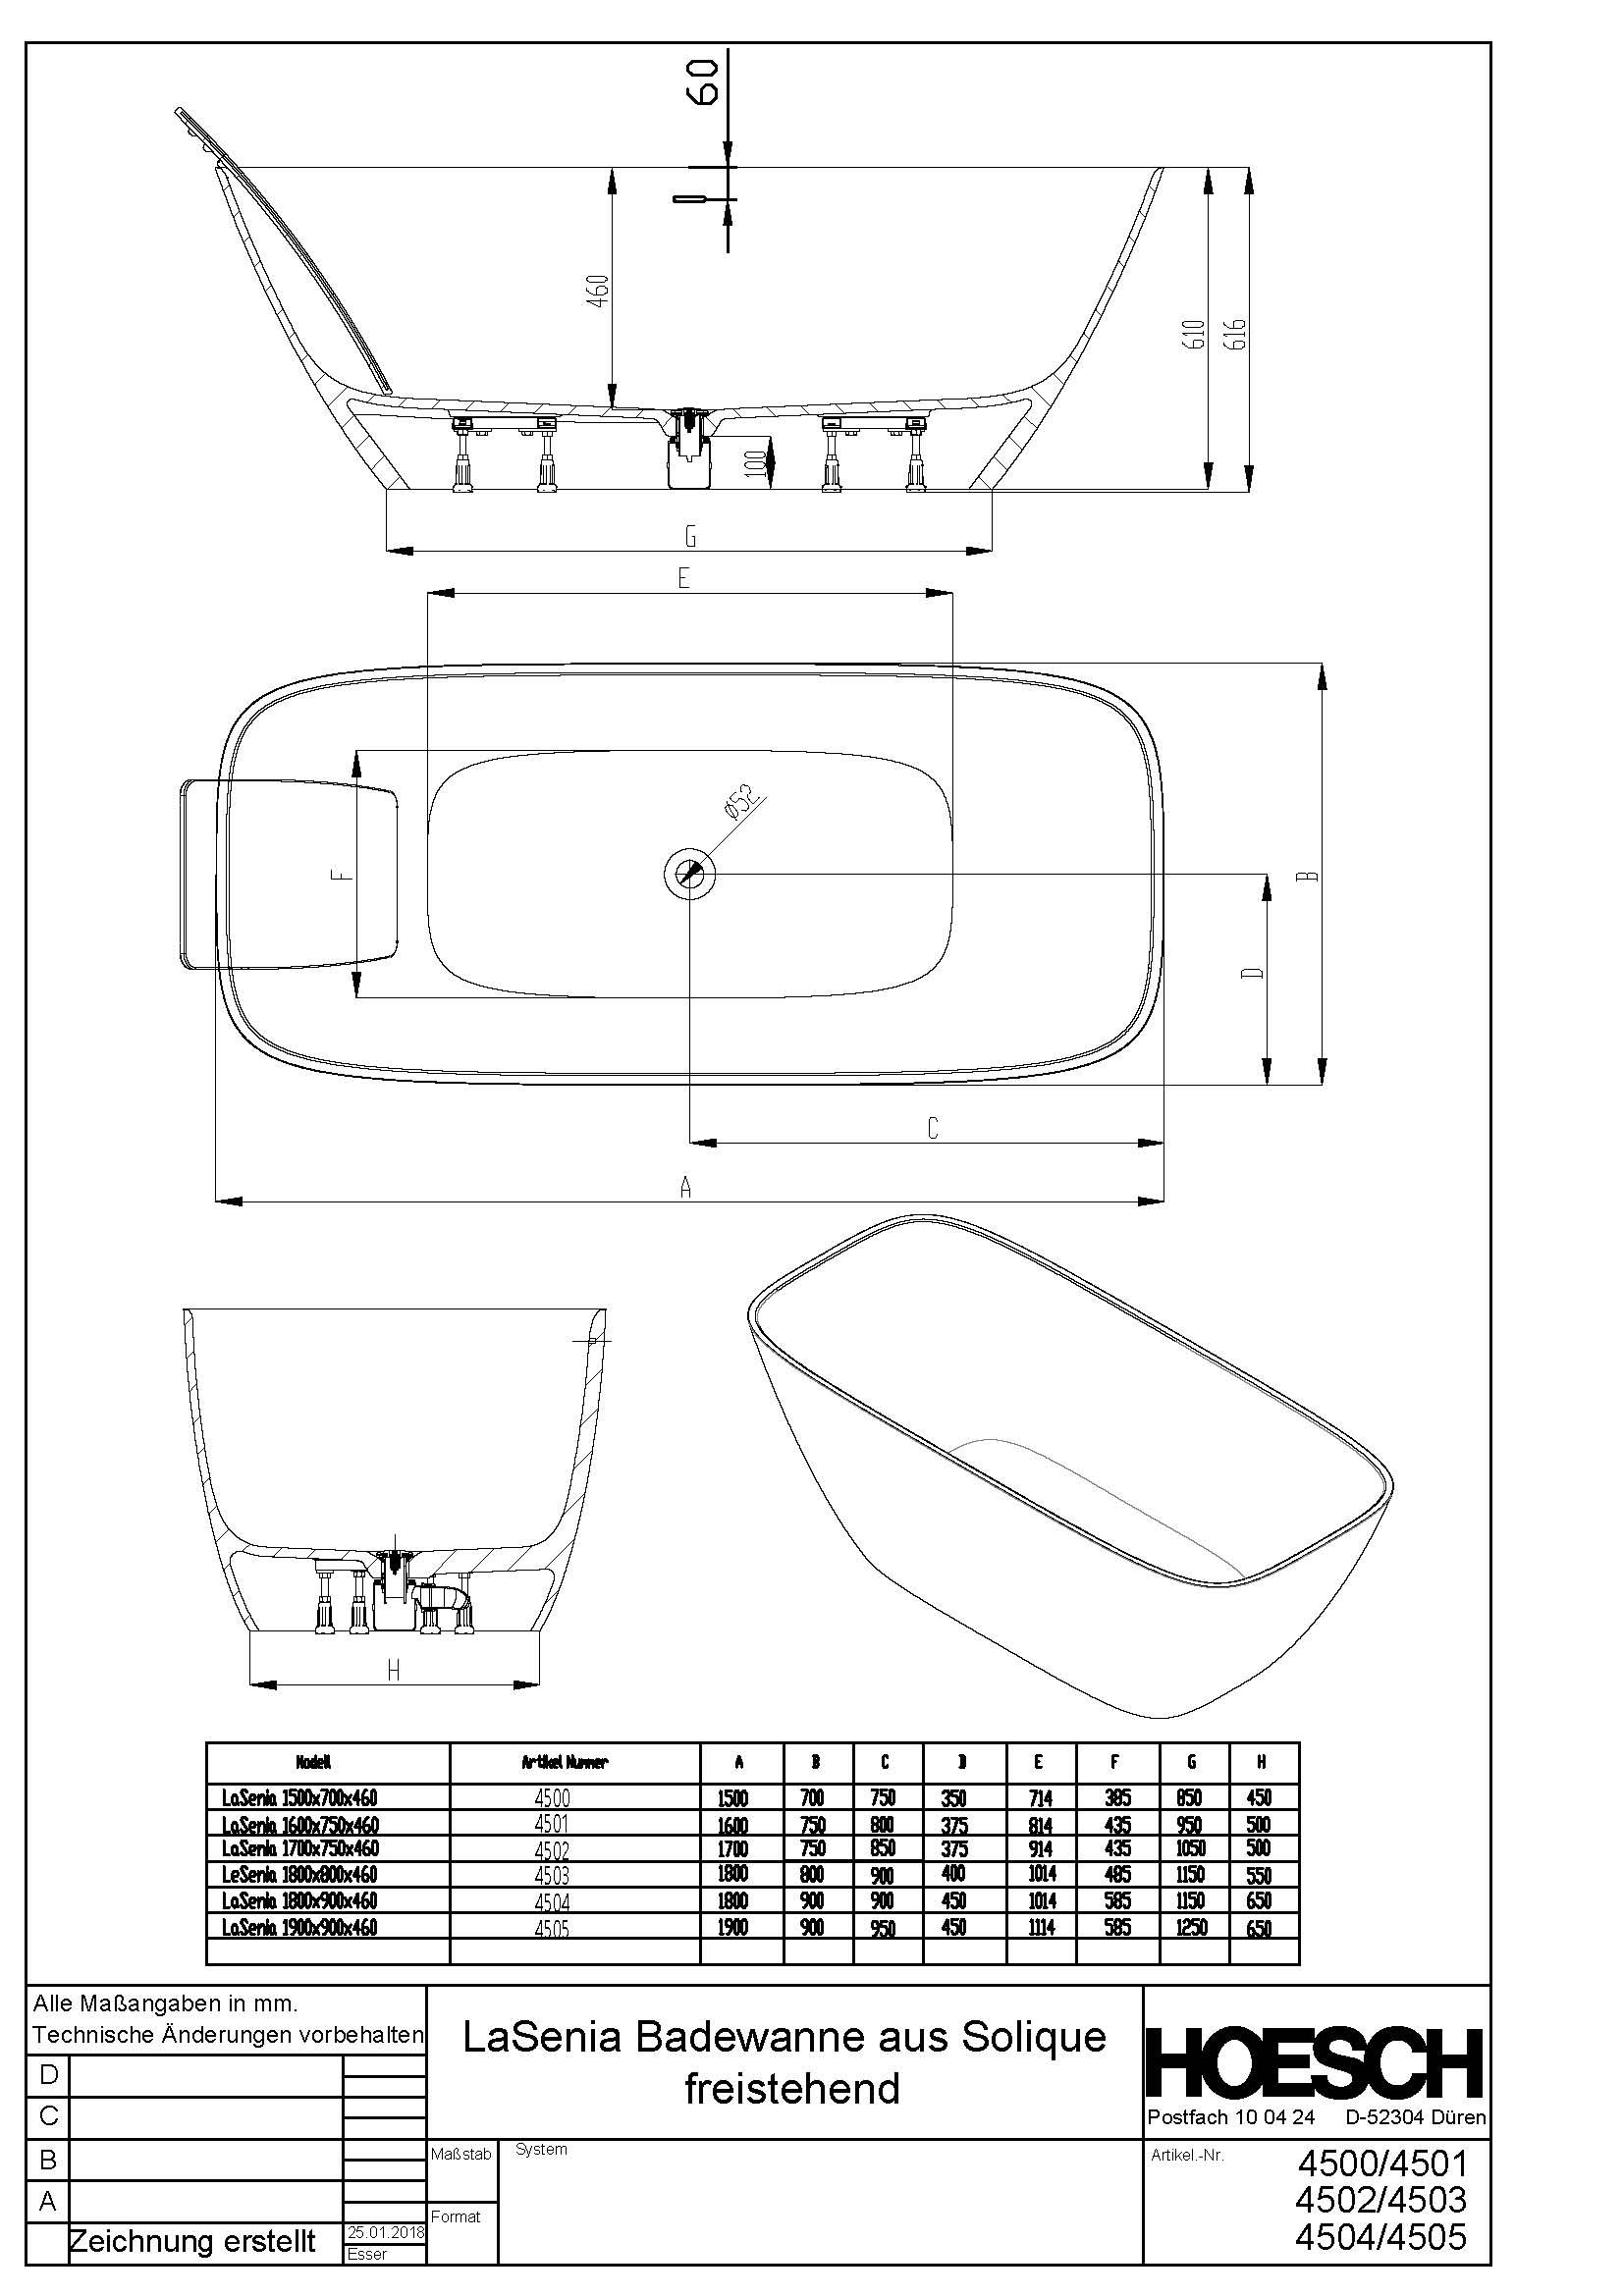 Hoesch Badewanne „Lasenia“ freistehend oval 160 × 75 cm in Weiß